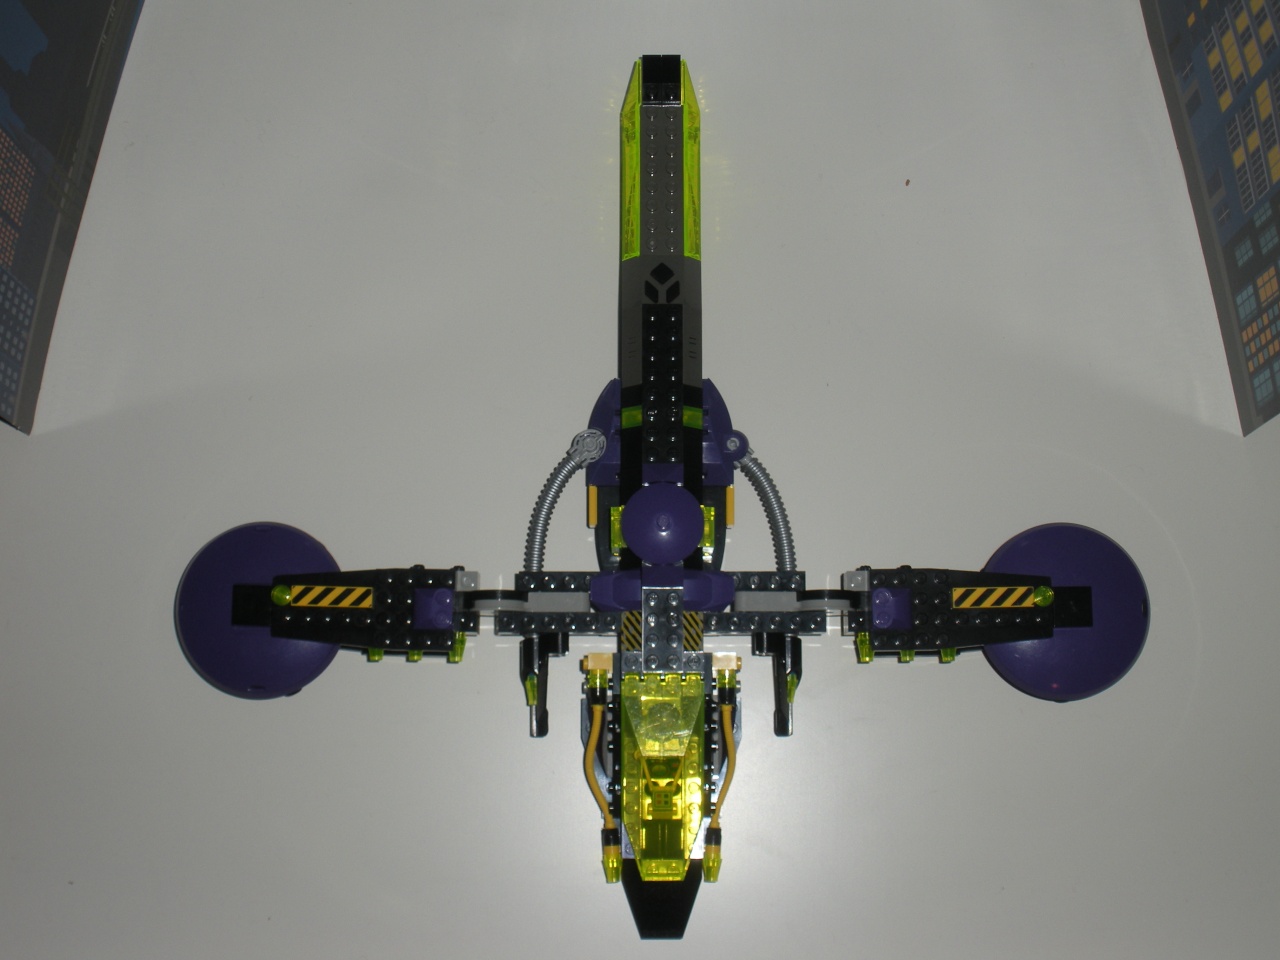 The Cyberfly Fighter Version I Cyberf12